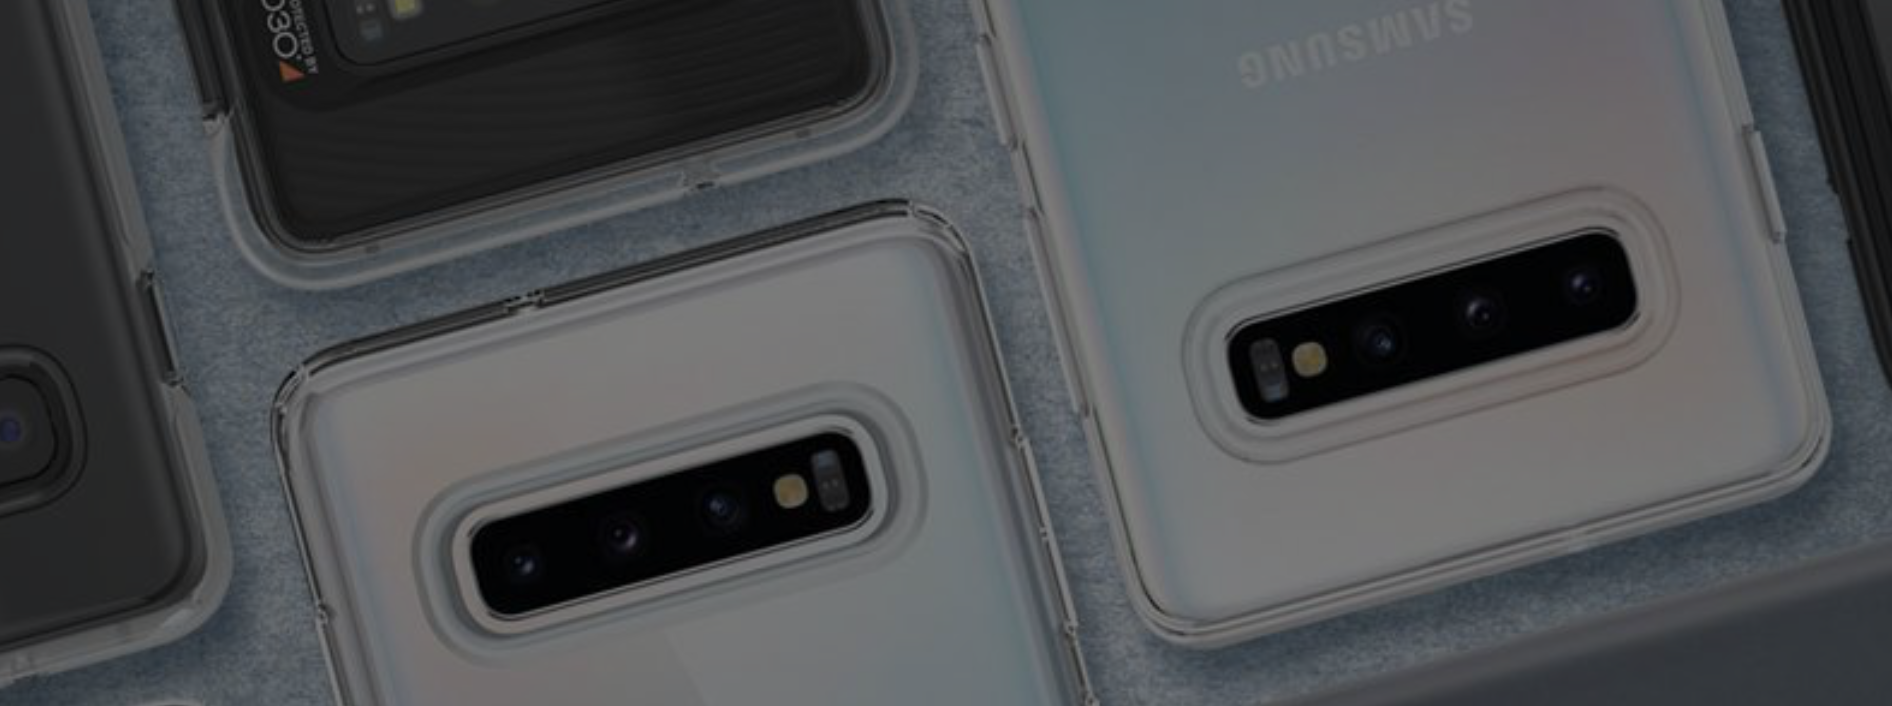 Galaxy S10+ Ace Pro Case